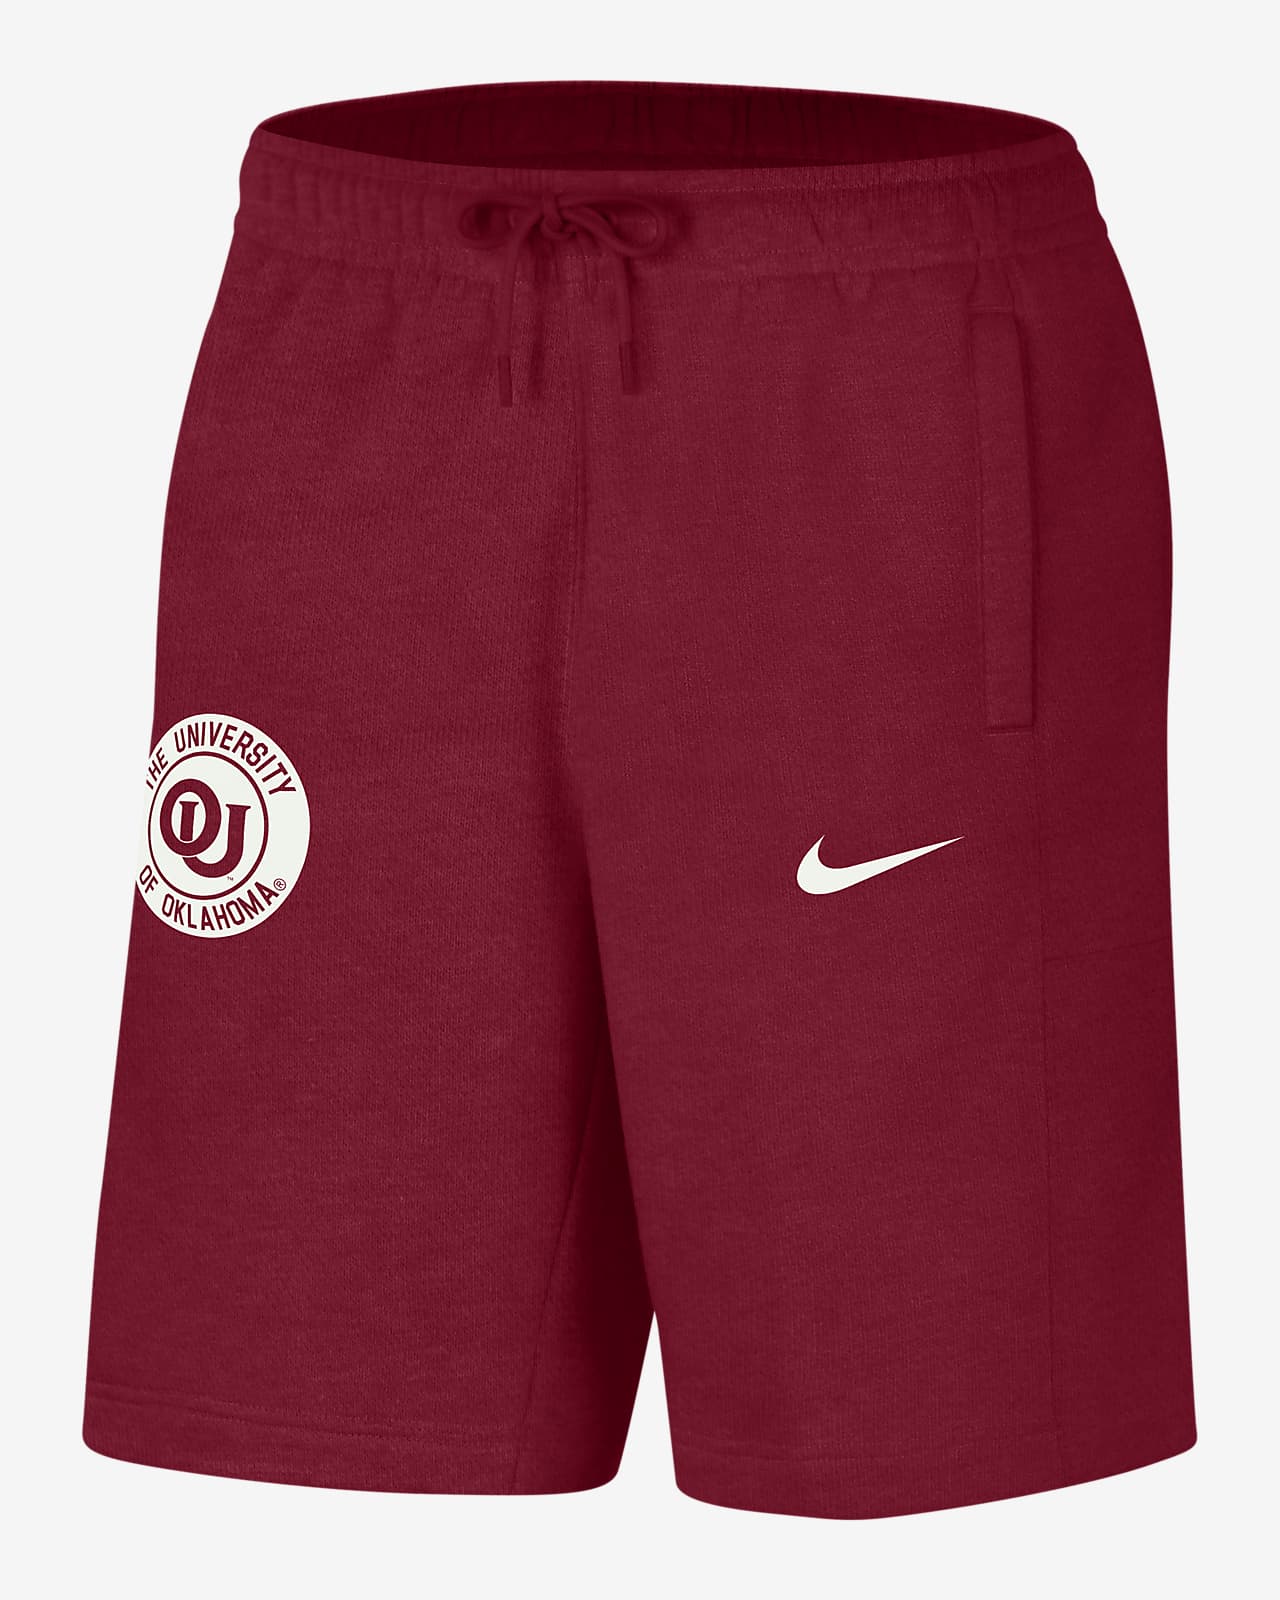 Shorts universitarios Nike para hombre Oklahoma